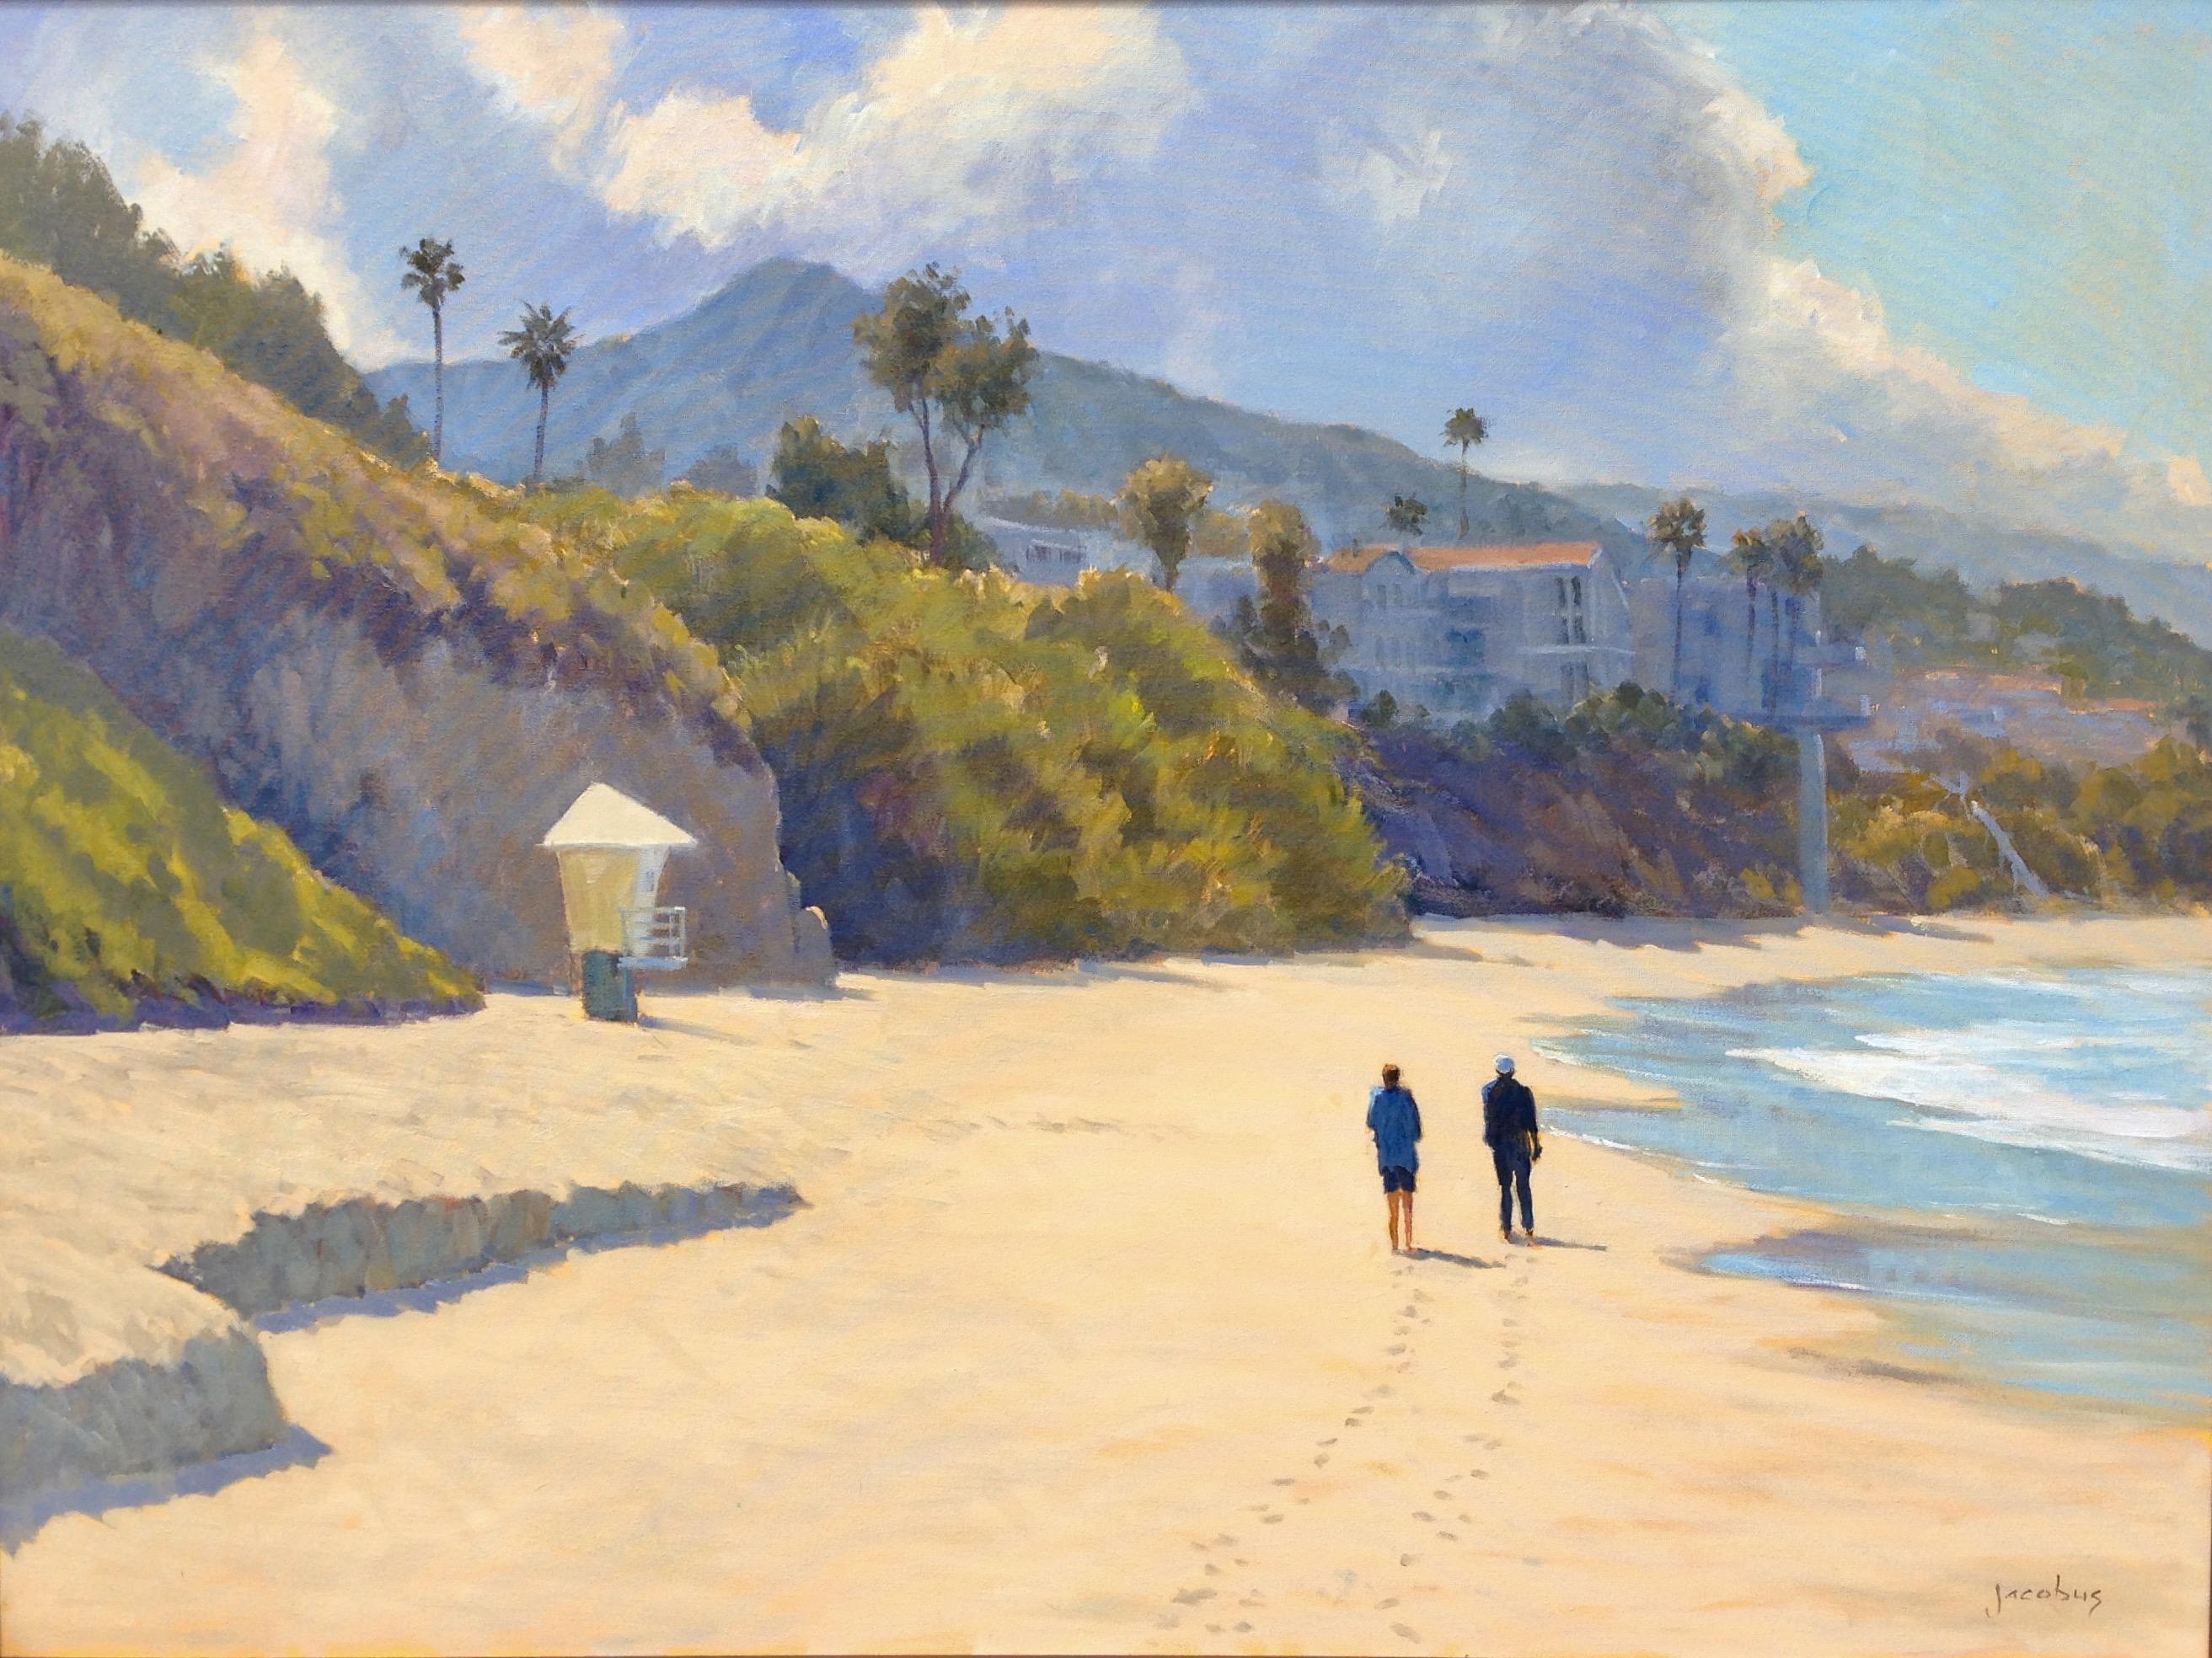 Jacobus Baas Landscape Painting - "Clearing Skies, Aliso Beach" Laguna Beach California Seascape Painting